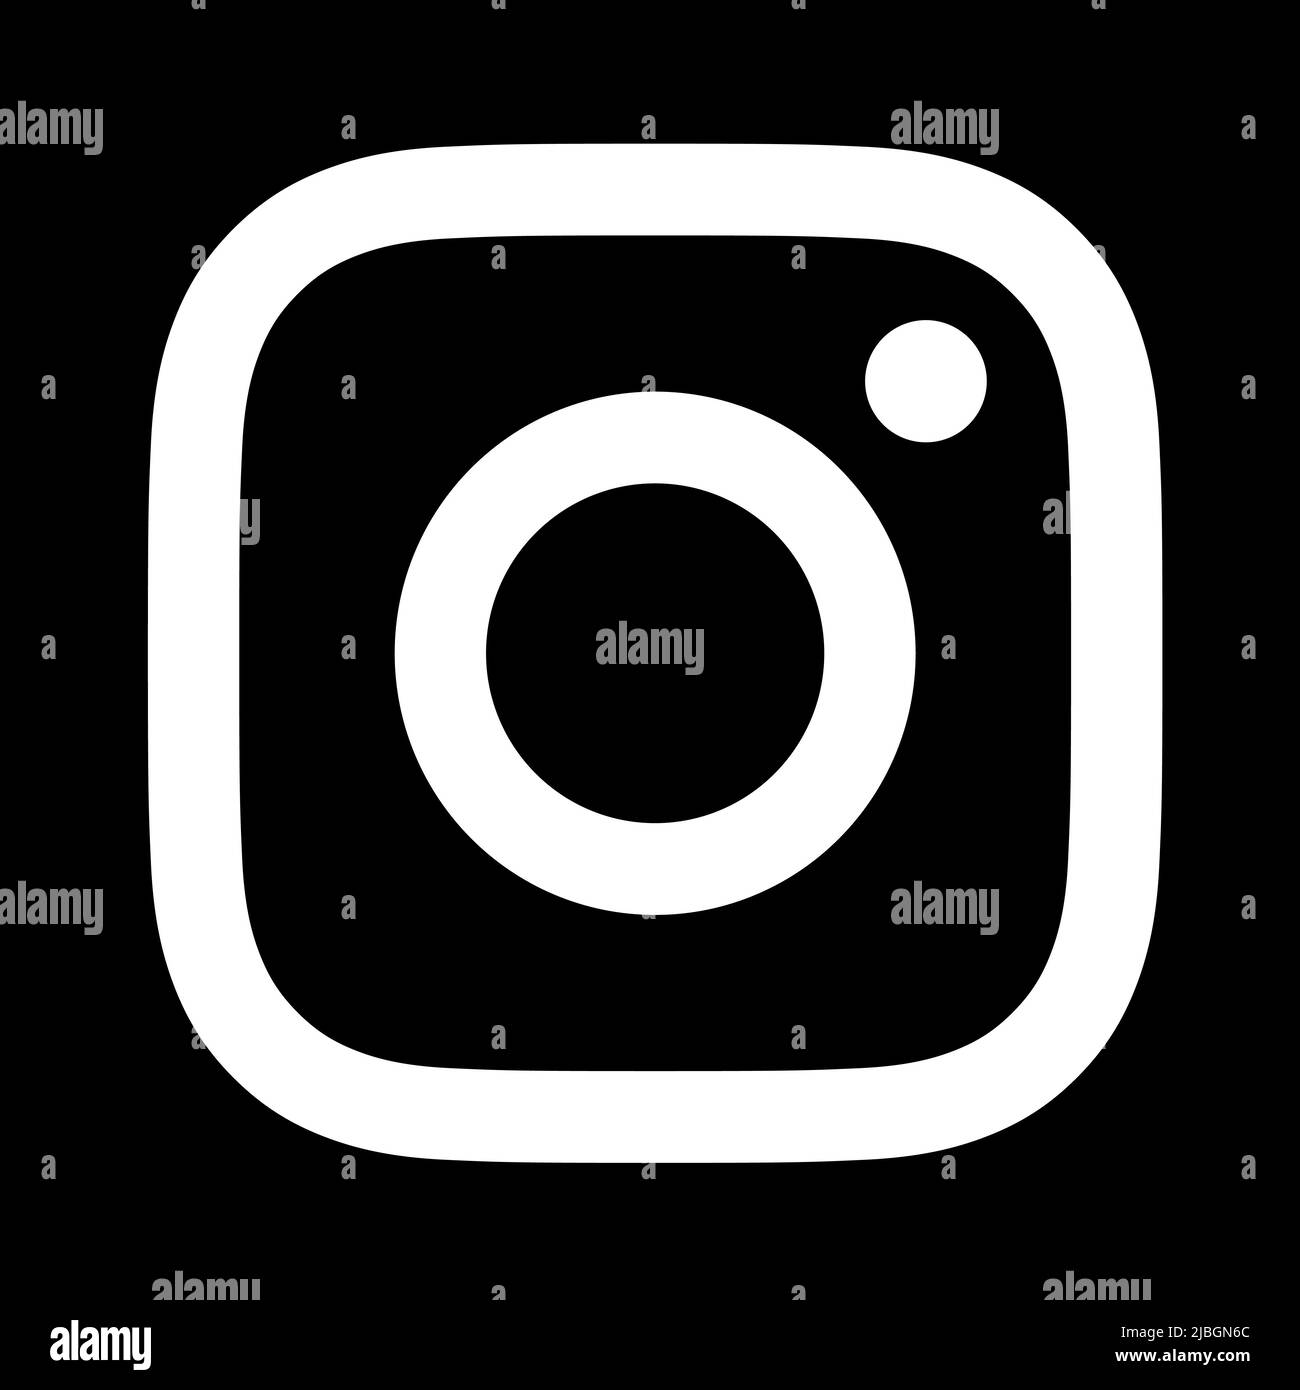 Instagram social media app icon Stock Vector